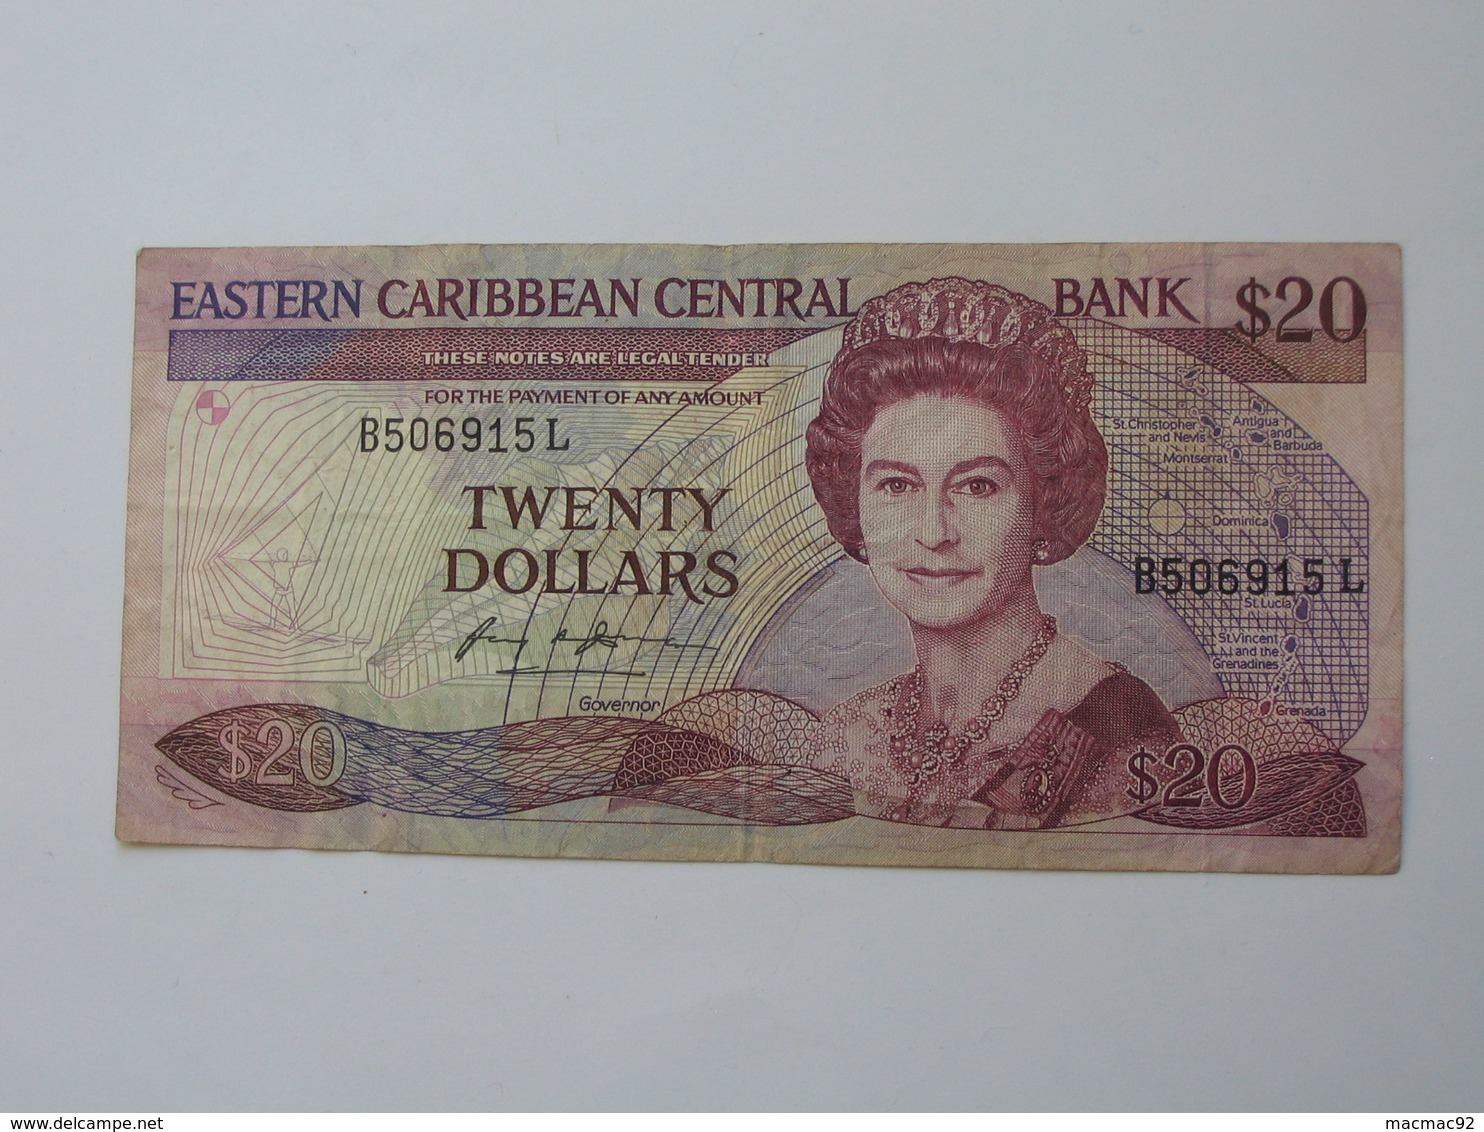 20 Twenty Dollars 1987-1988 Eastern Caribbean Central Bank **** EN ACHAT IMMEDIAT **** - East Carribeans